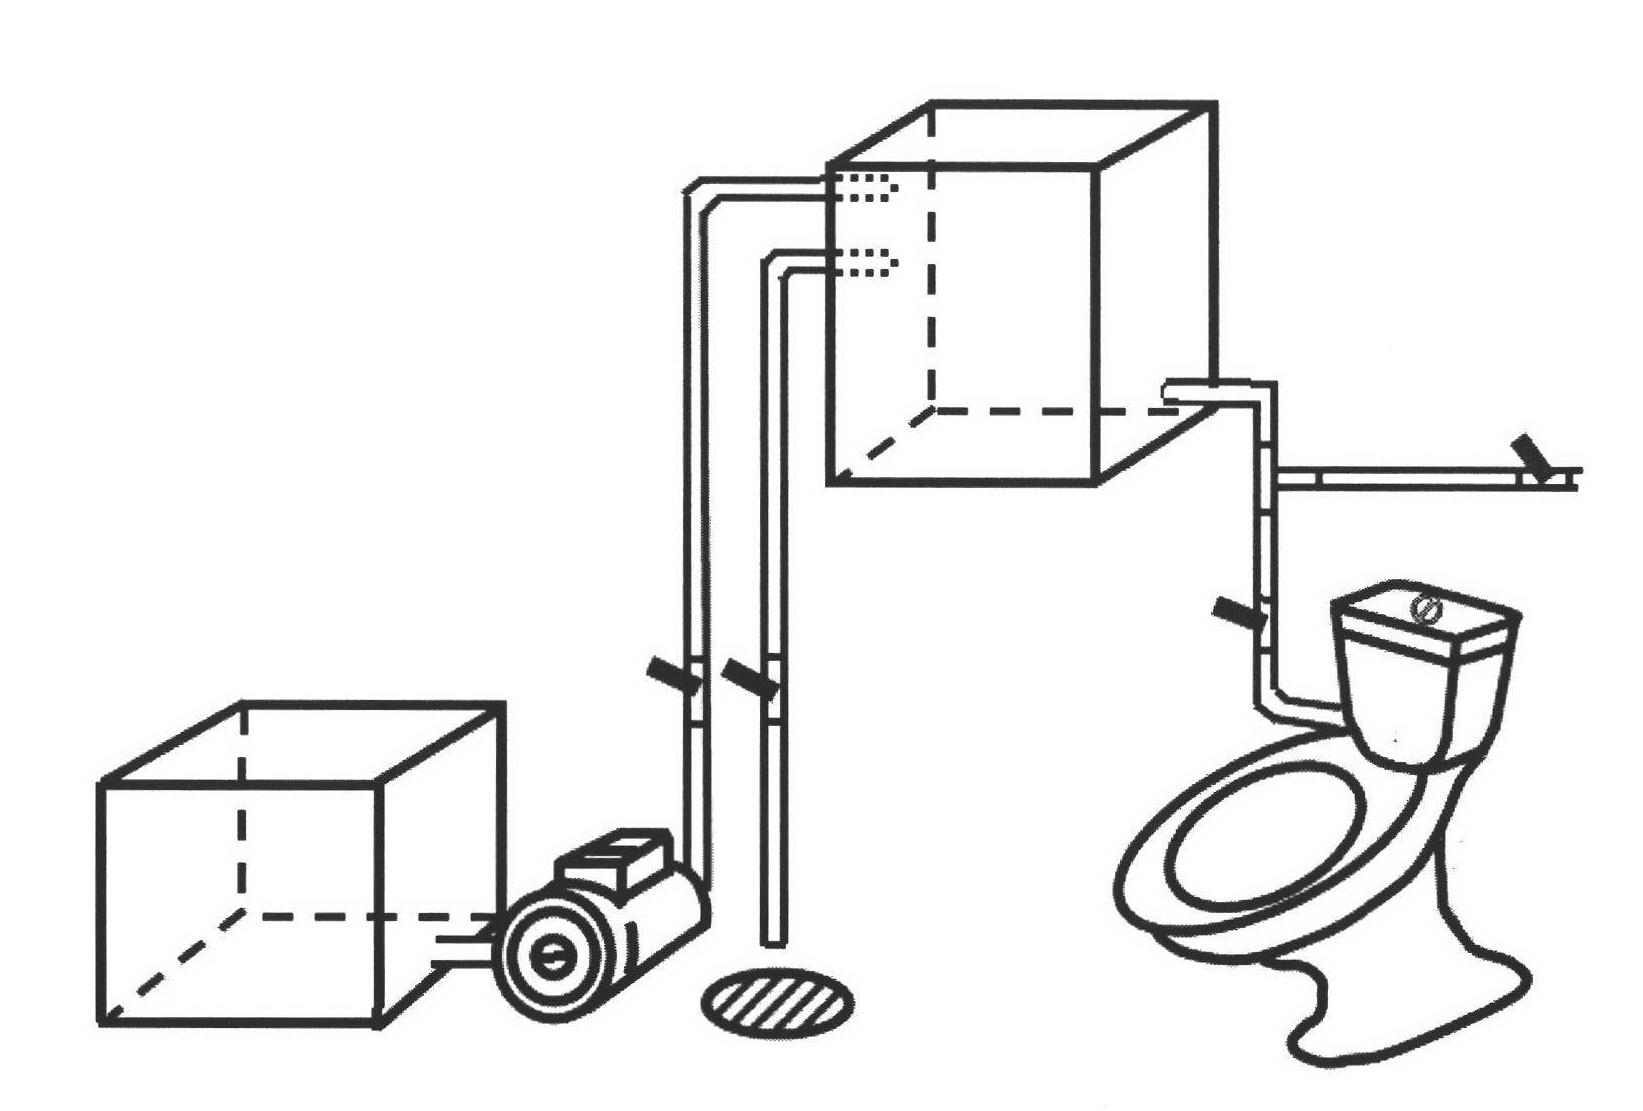 Household sewage treatment equipment